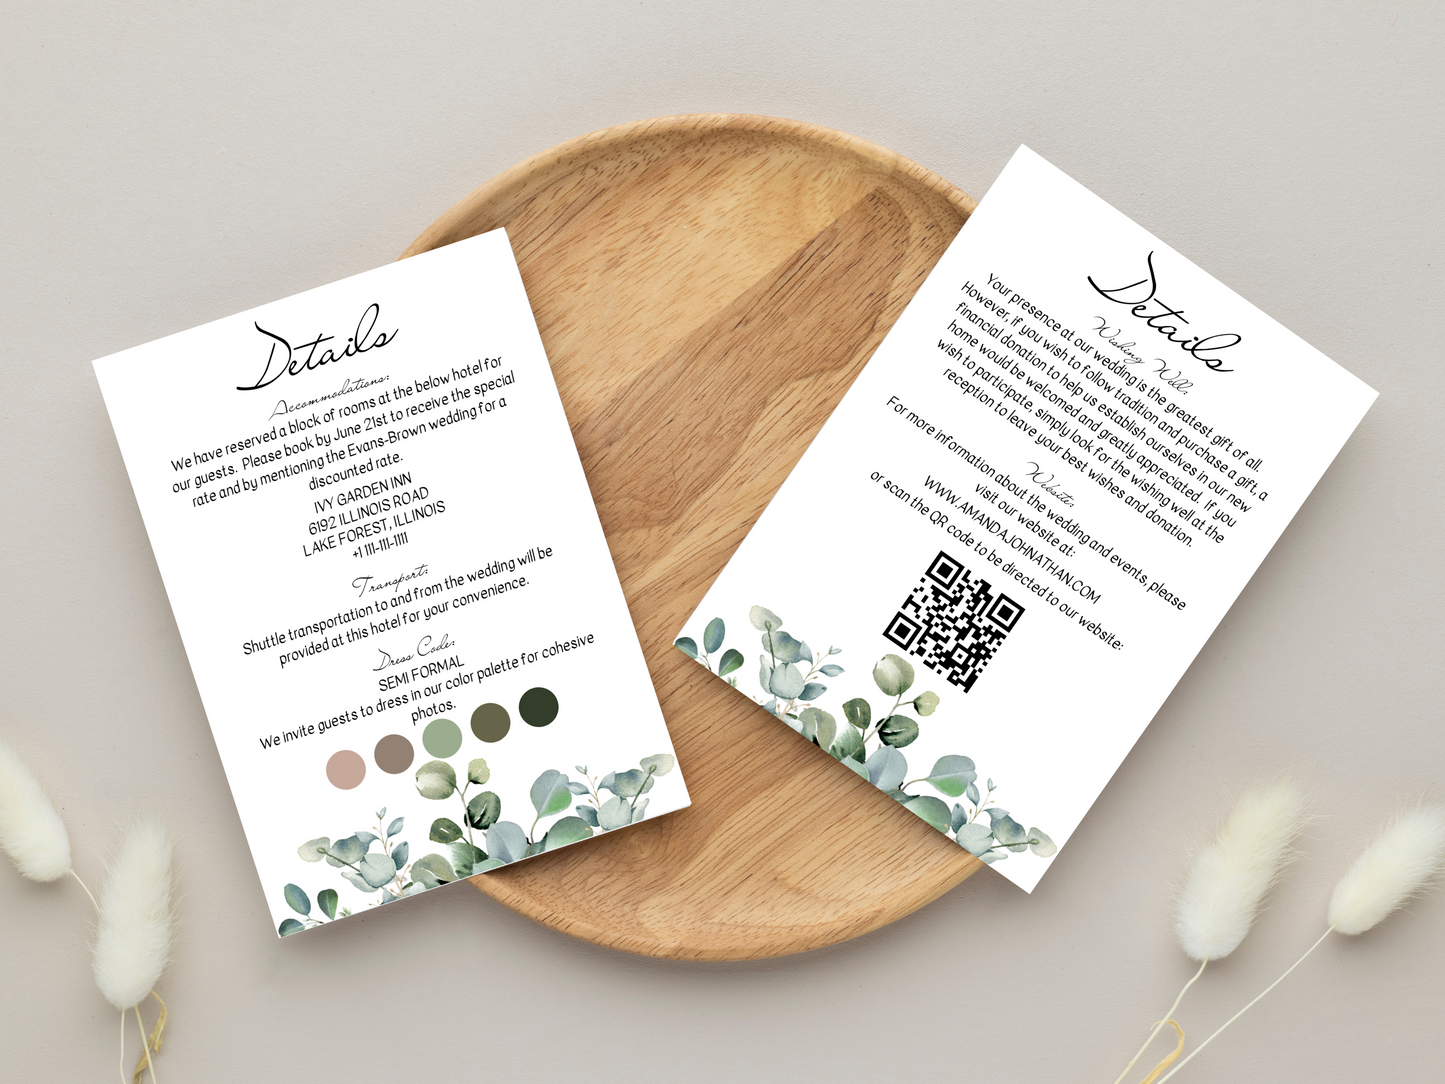 Eucalyptus & Gold Wedding Invitation & Insert Card Templates Bundle, Printable Templates